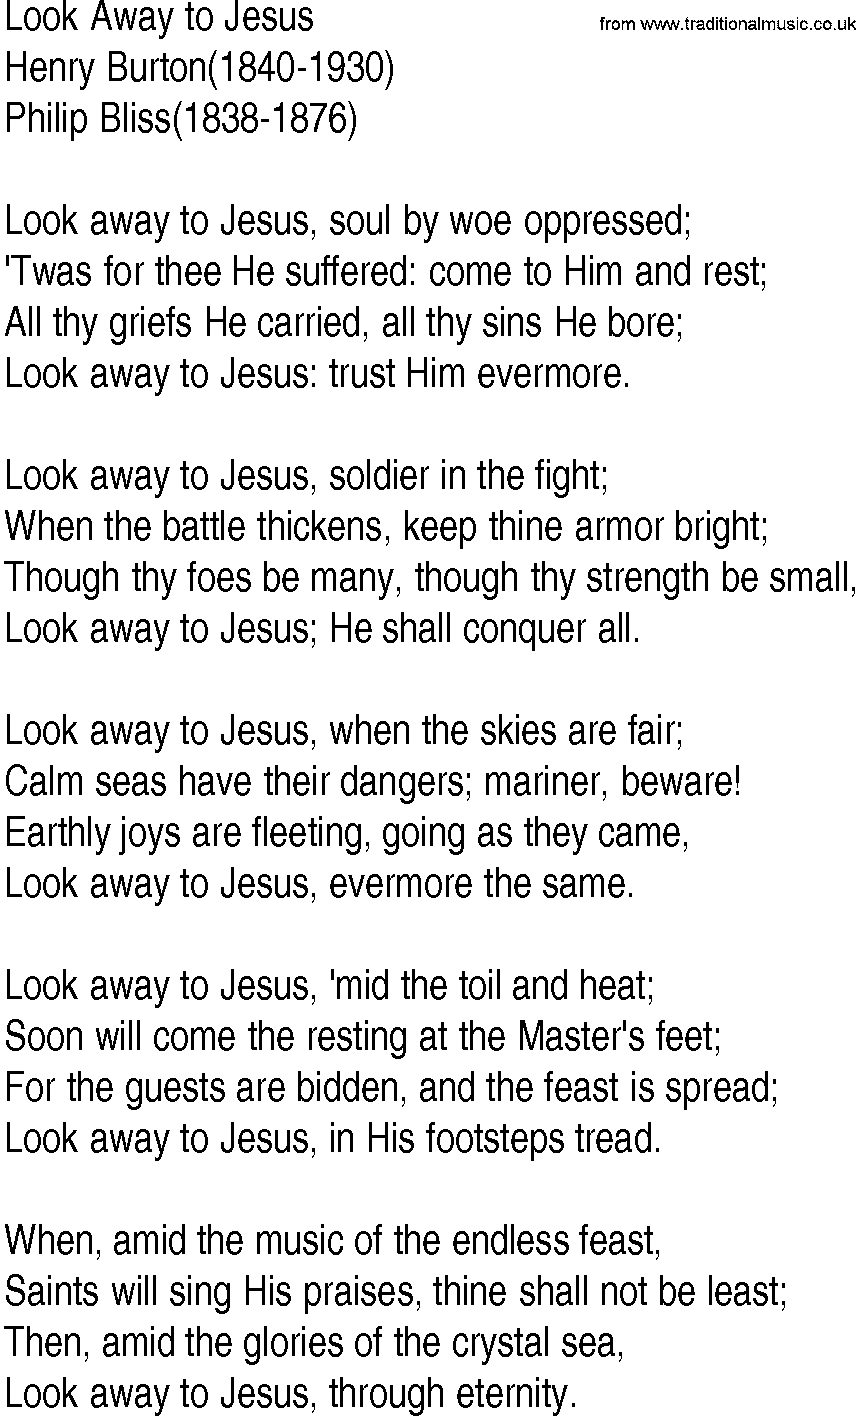 Hymn and Gospel Song: Look Away to Jesus by Henry Burton lyrics